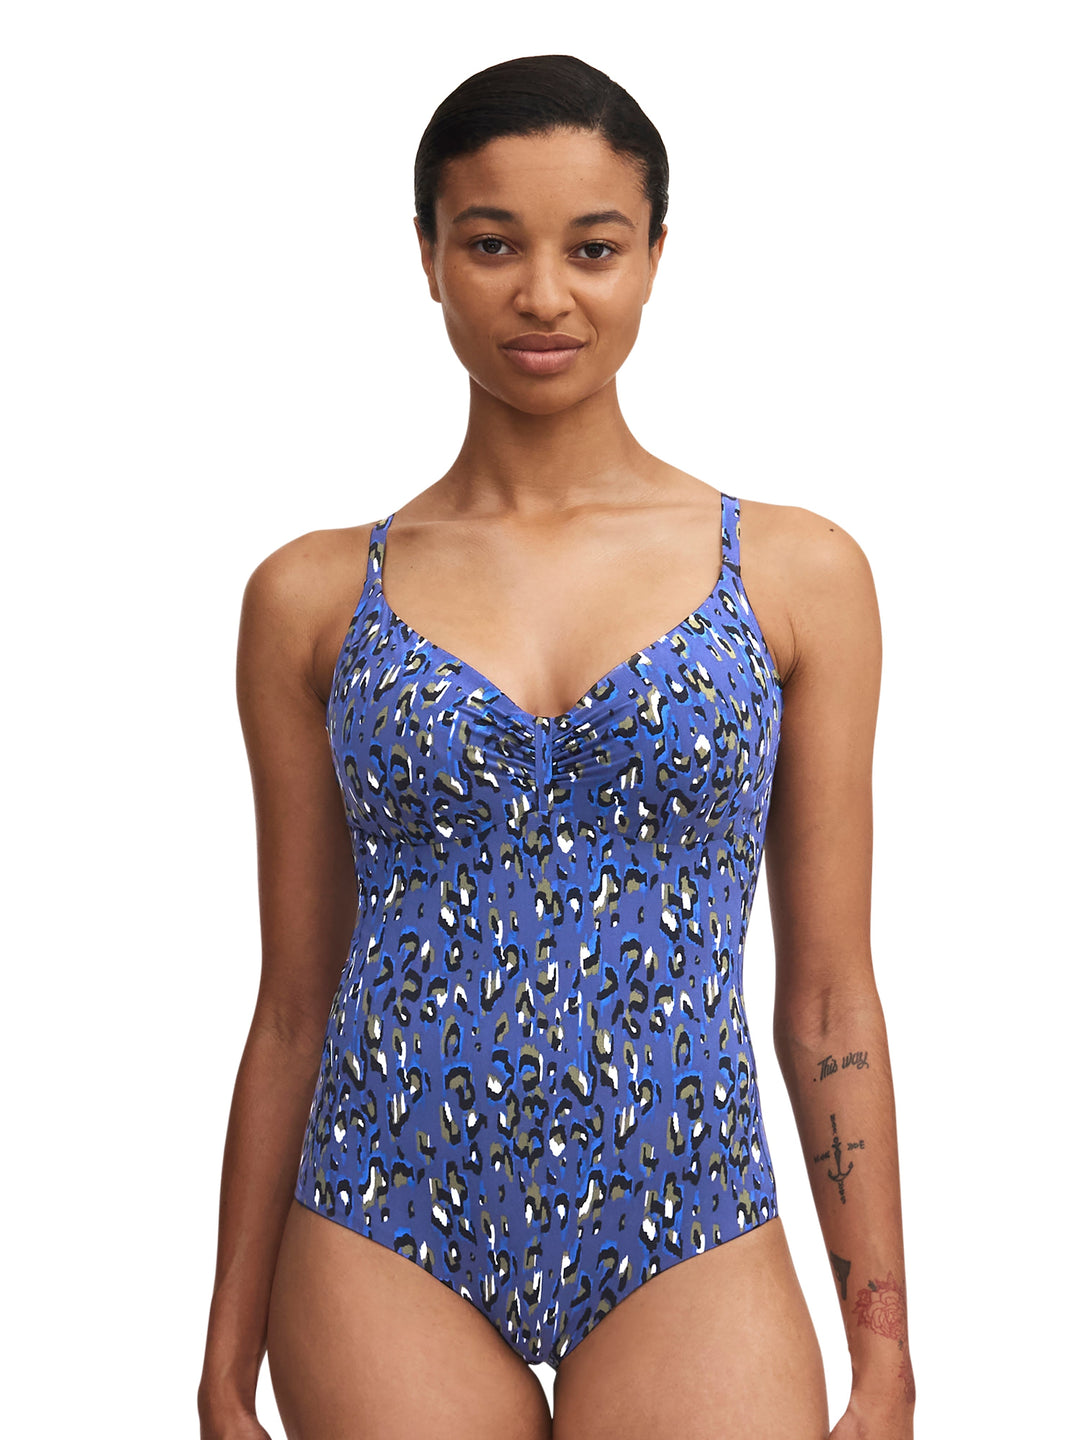 Chantelle Swimwear Eos Covering Underwired Swimsuit - Blue Leopard Full Cup Swimsuit Chantelle 